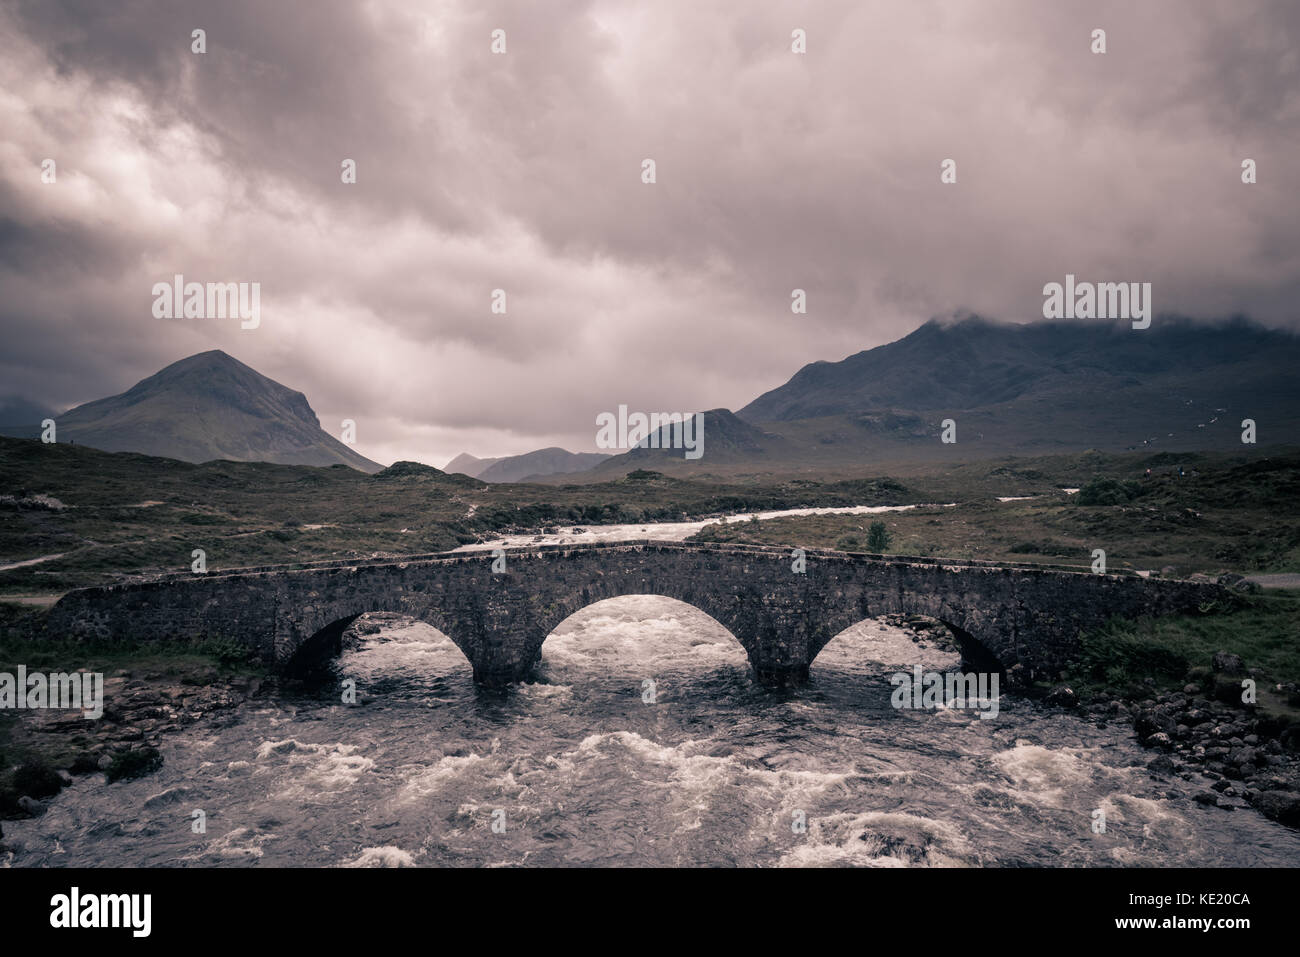 Sligachan bridge with Cuillins Hills on isle of Skye, Scotland. Stock Photo